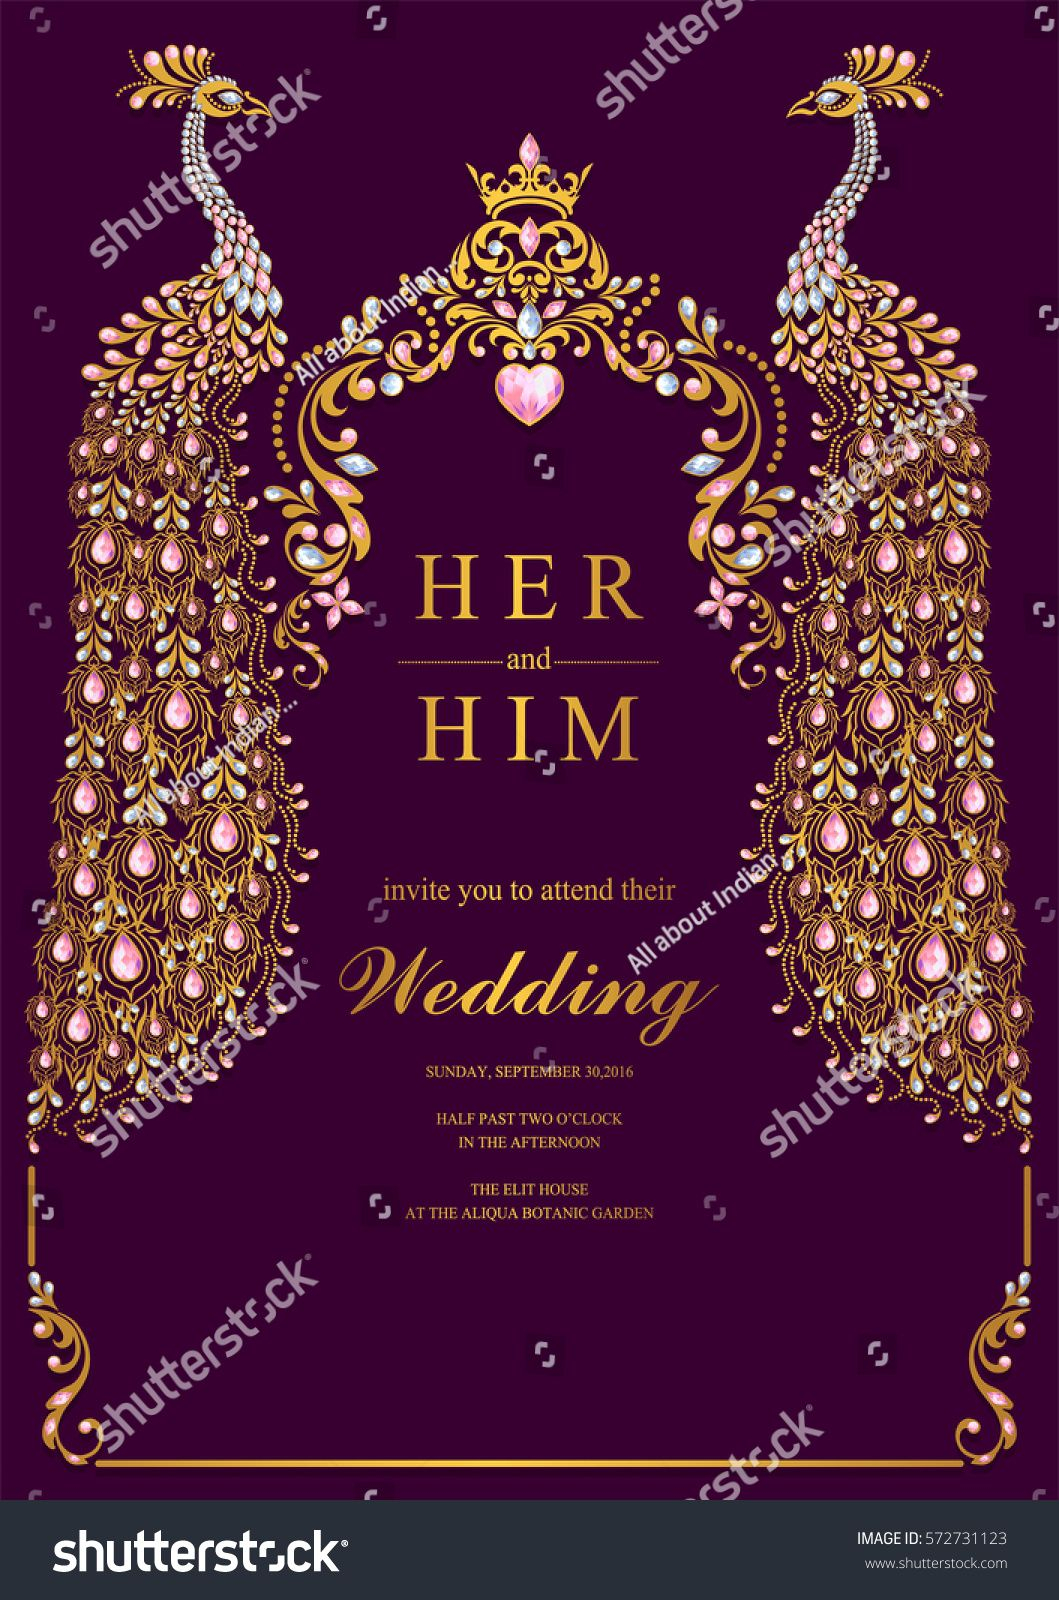 get-wedding-card-matter-in-hindi-ms-word-file-download-pics-wedding-card